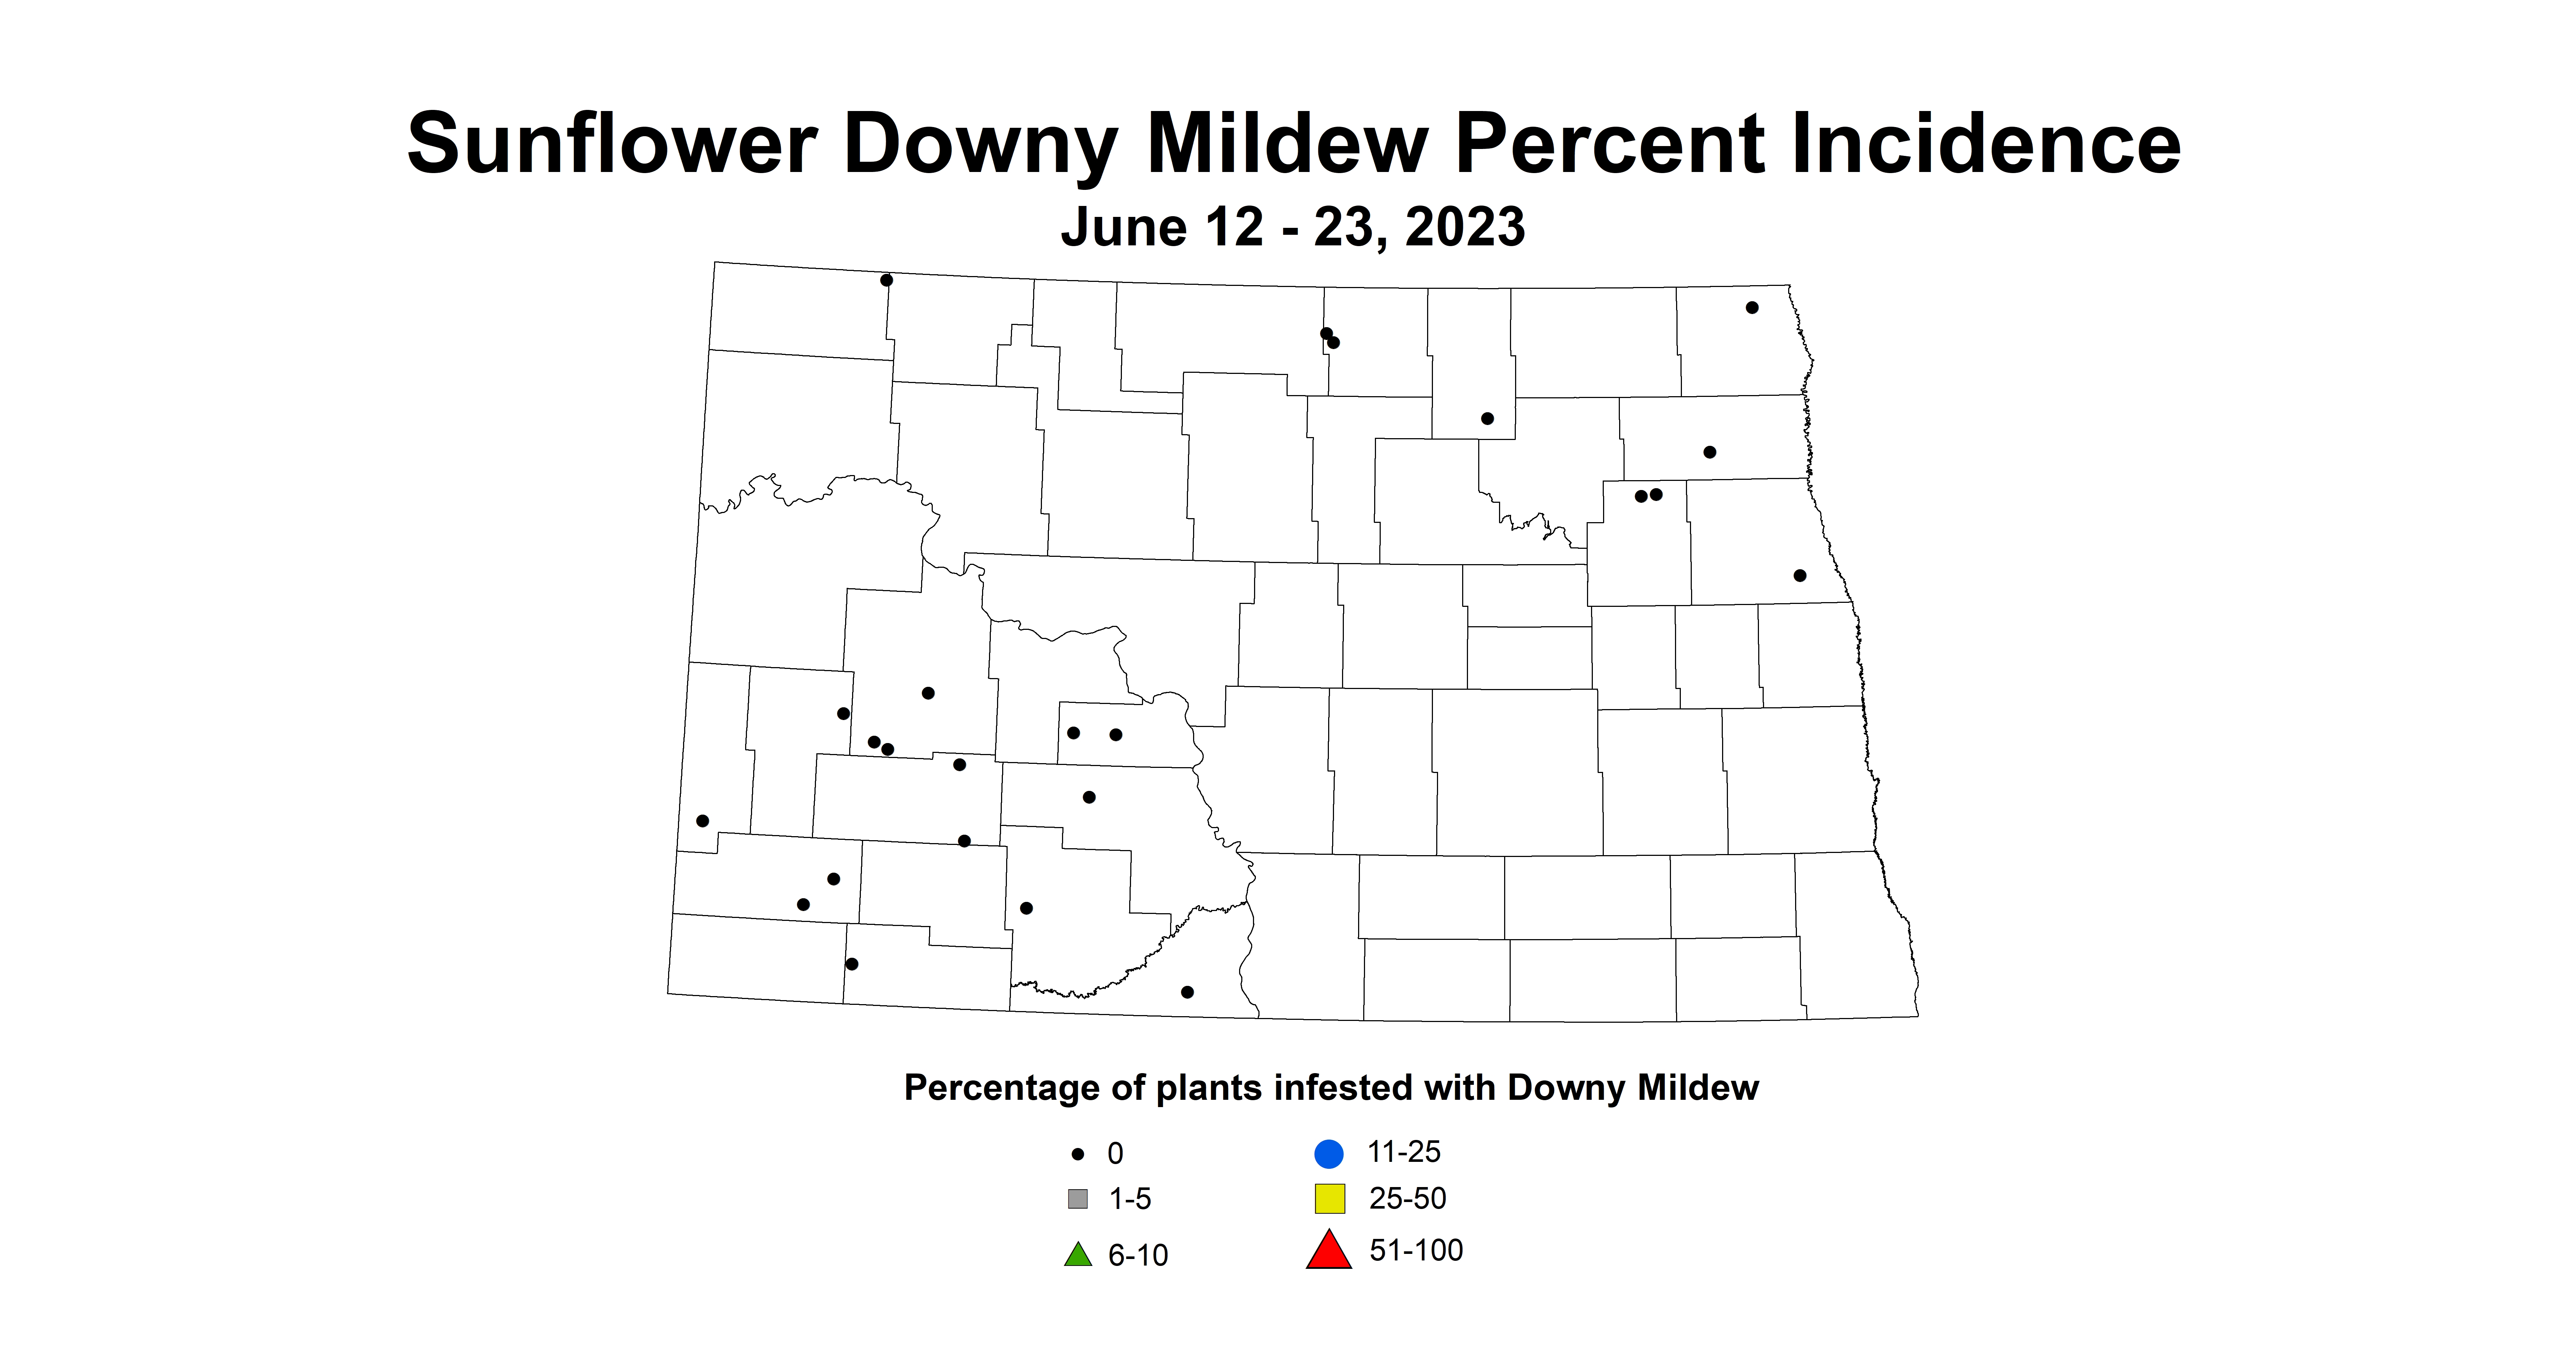 sunflower downy mildew incidence June 12-23 2023